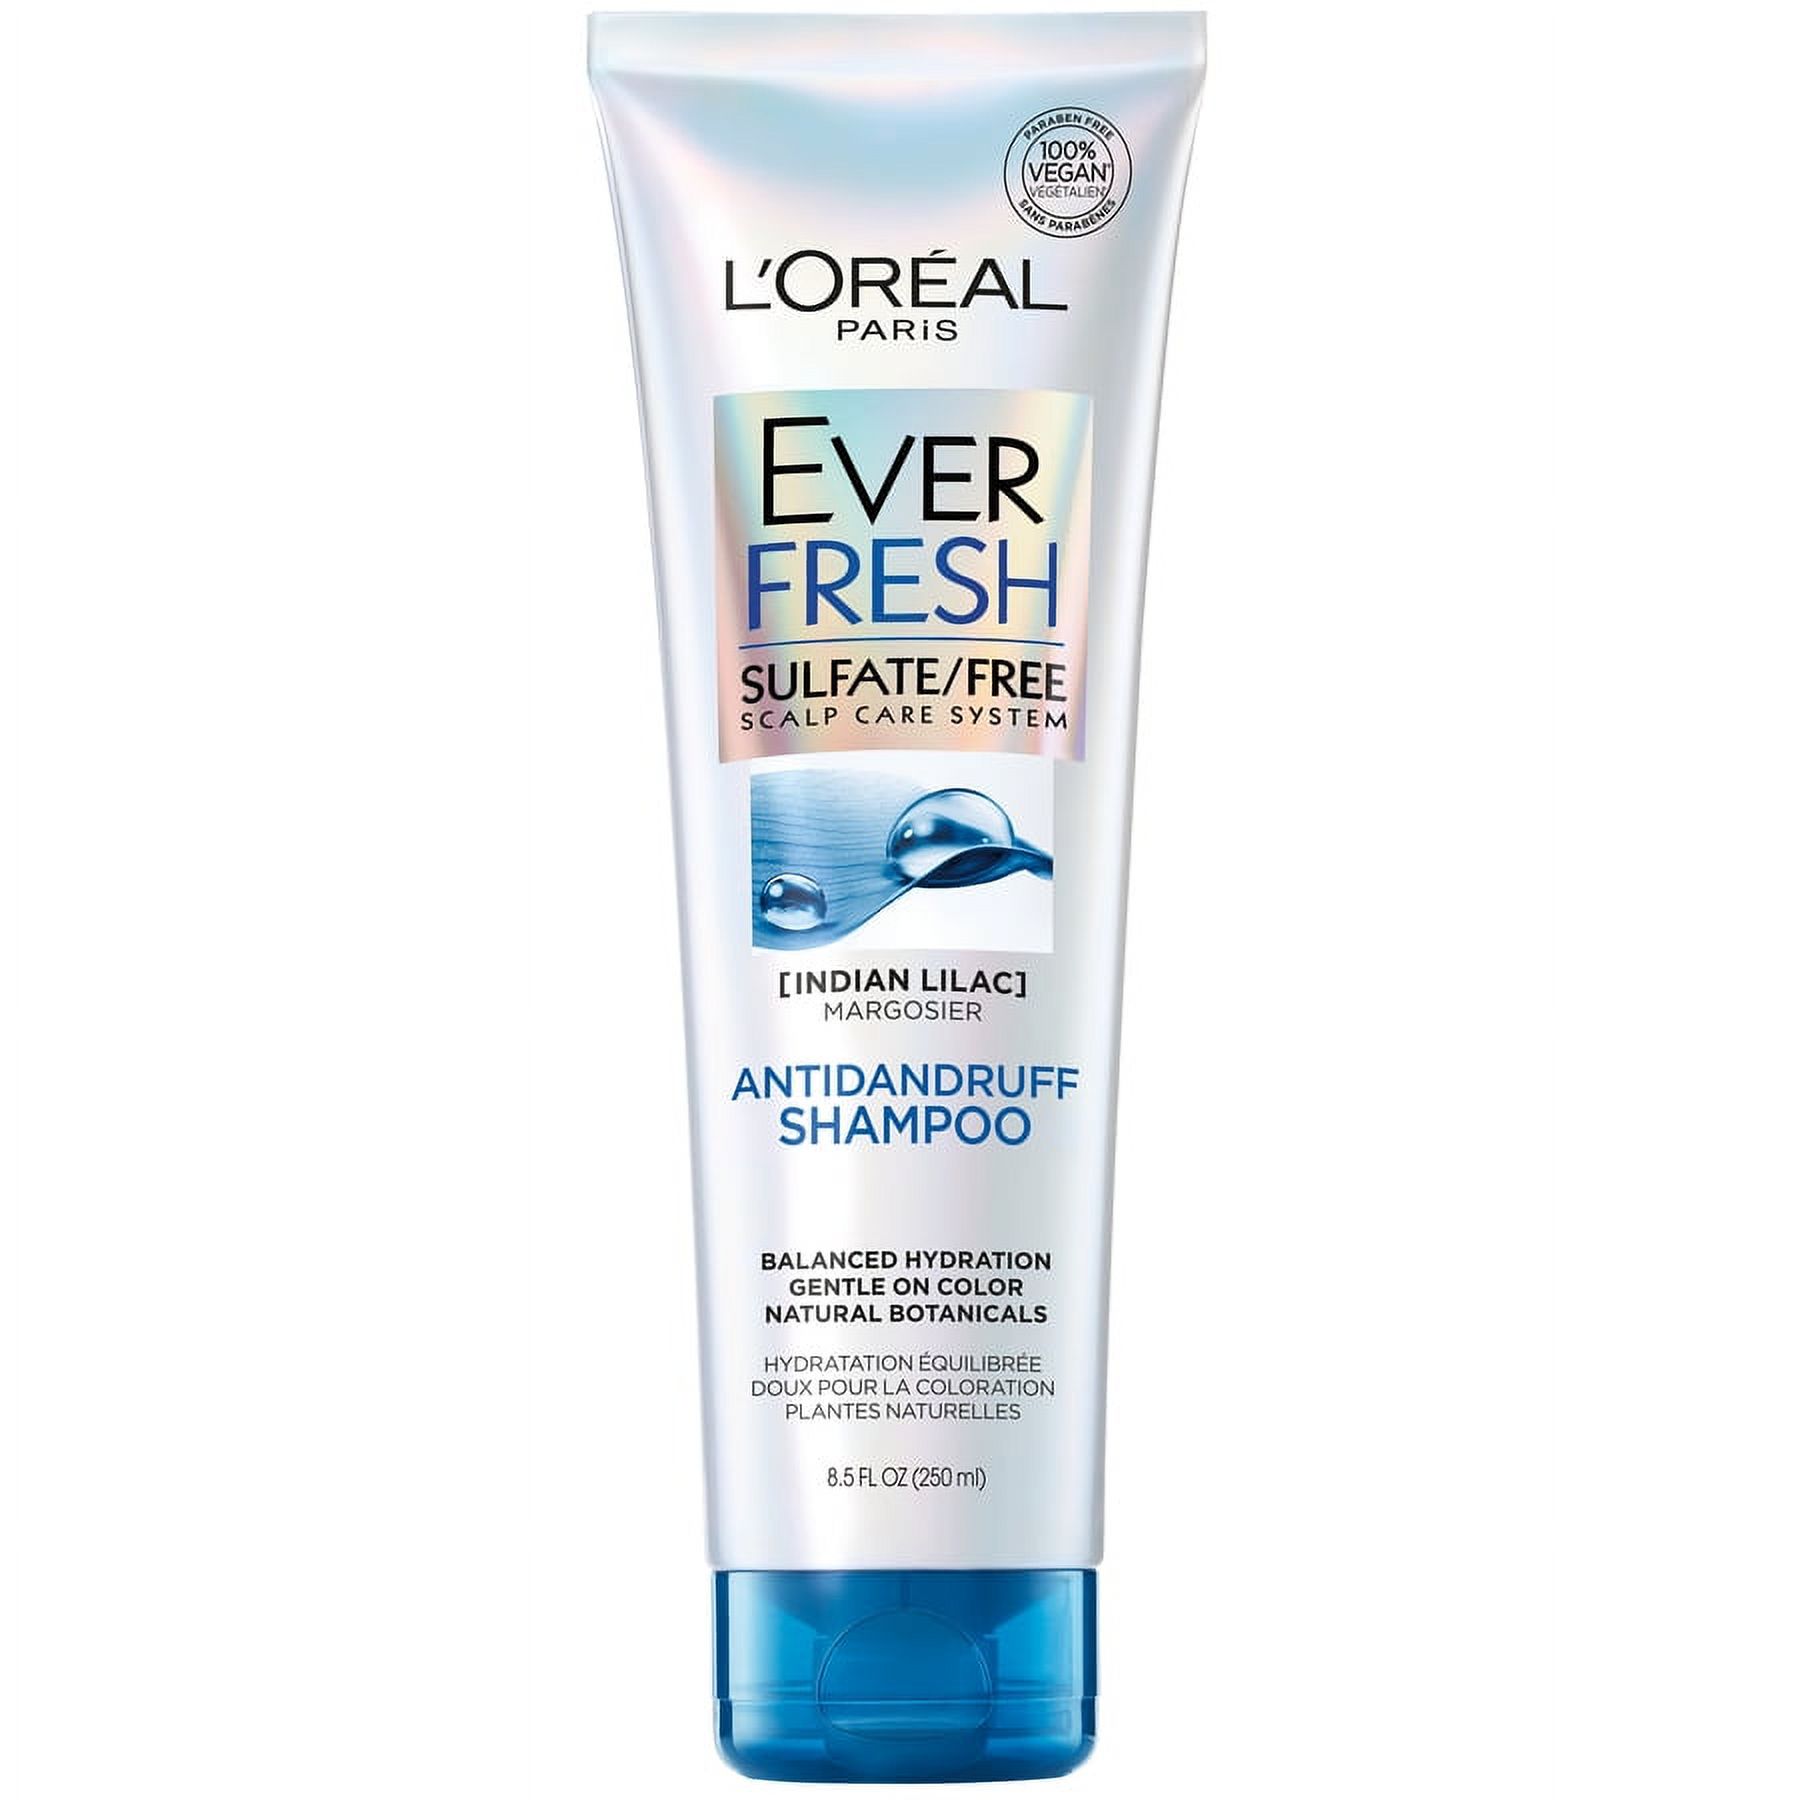 L'Oreal Paris EverFresh Antidandruff Shampoo Sulfate Free, 8.5 fl. oz. - image 1 of 5